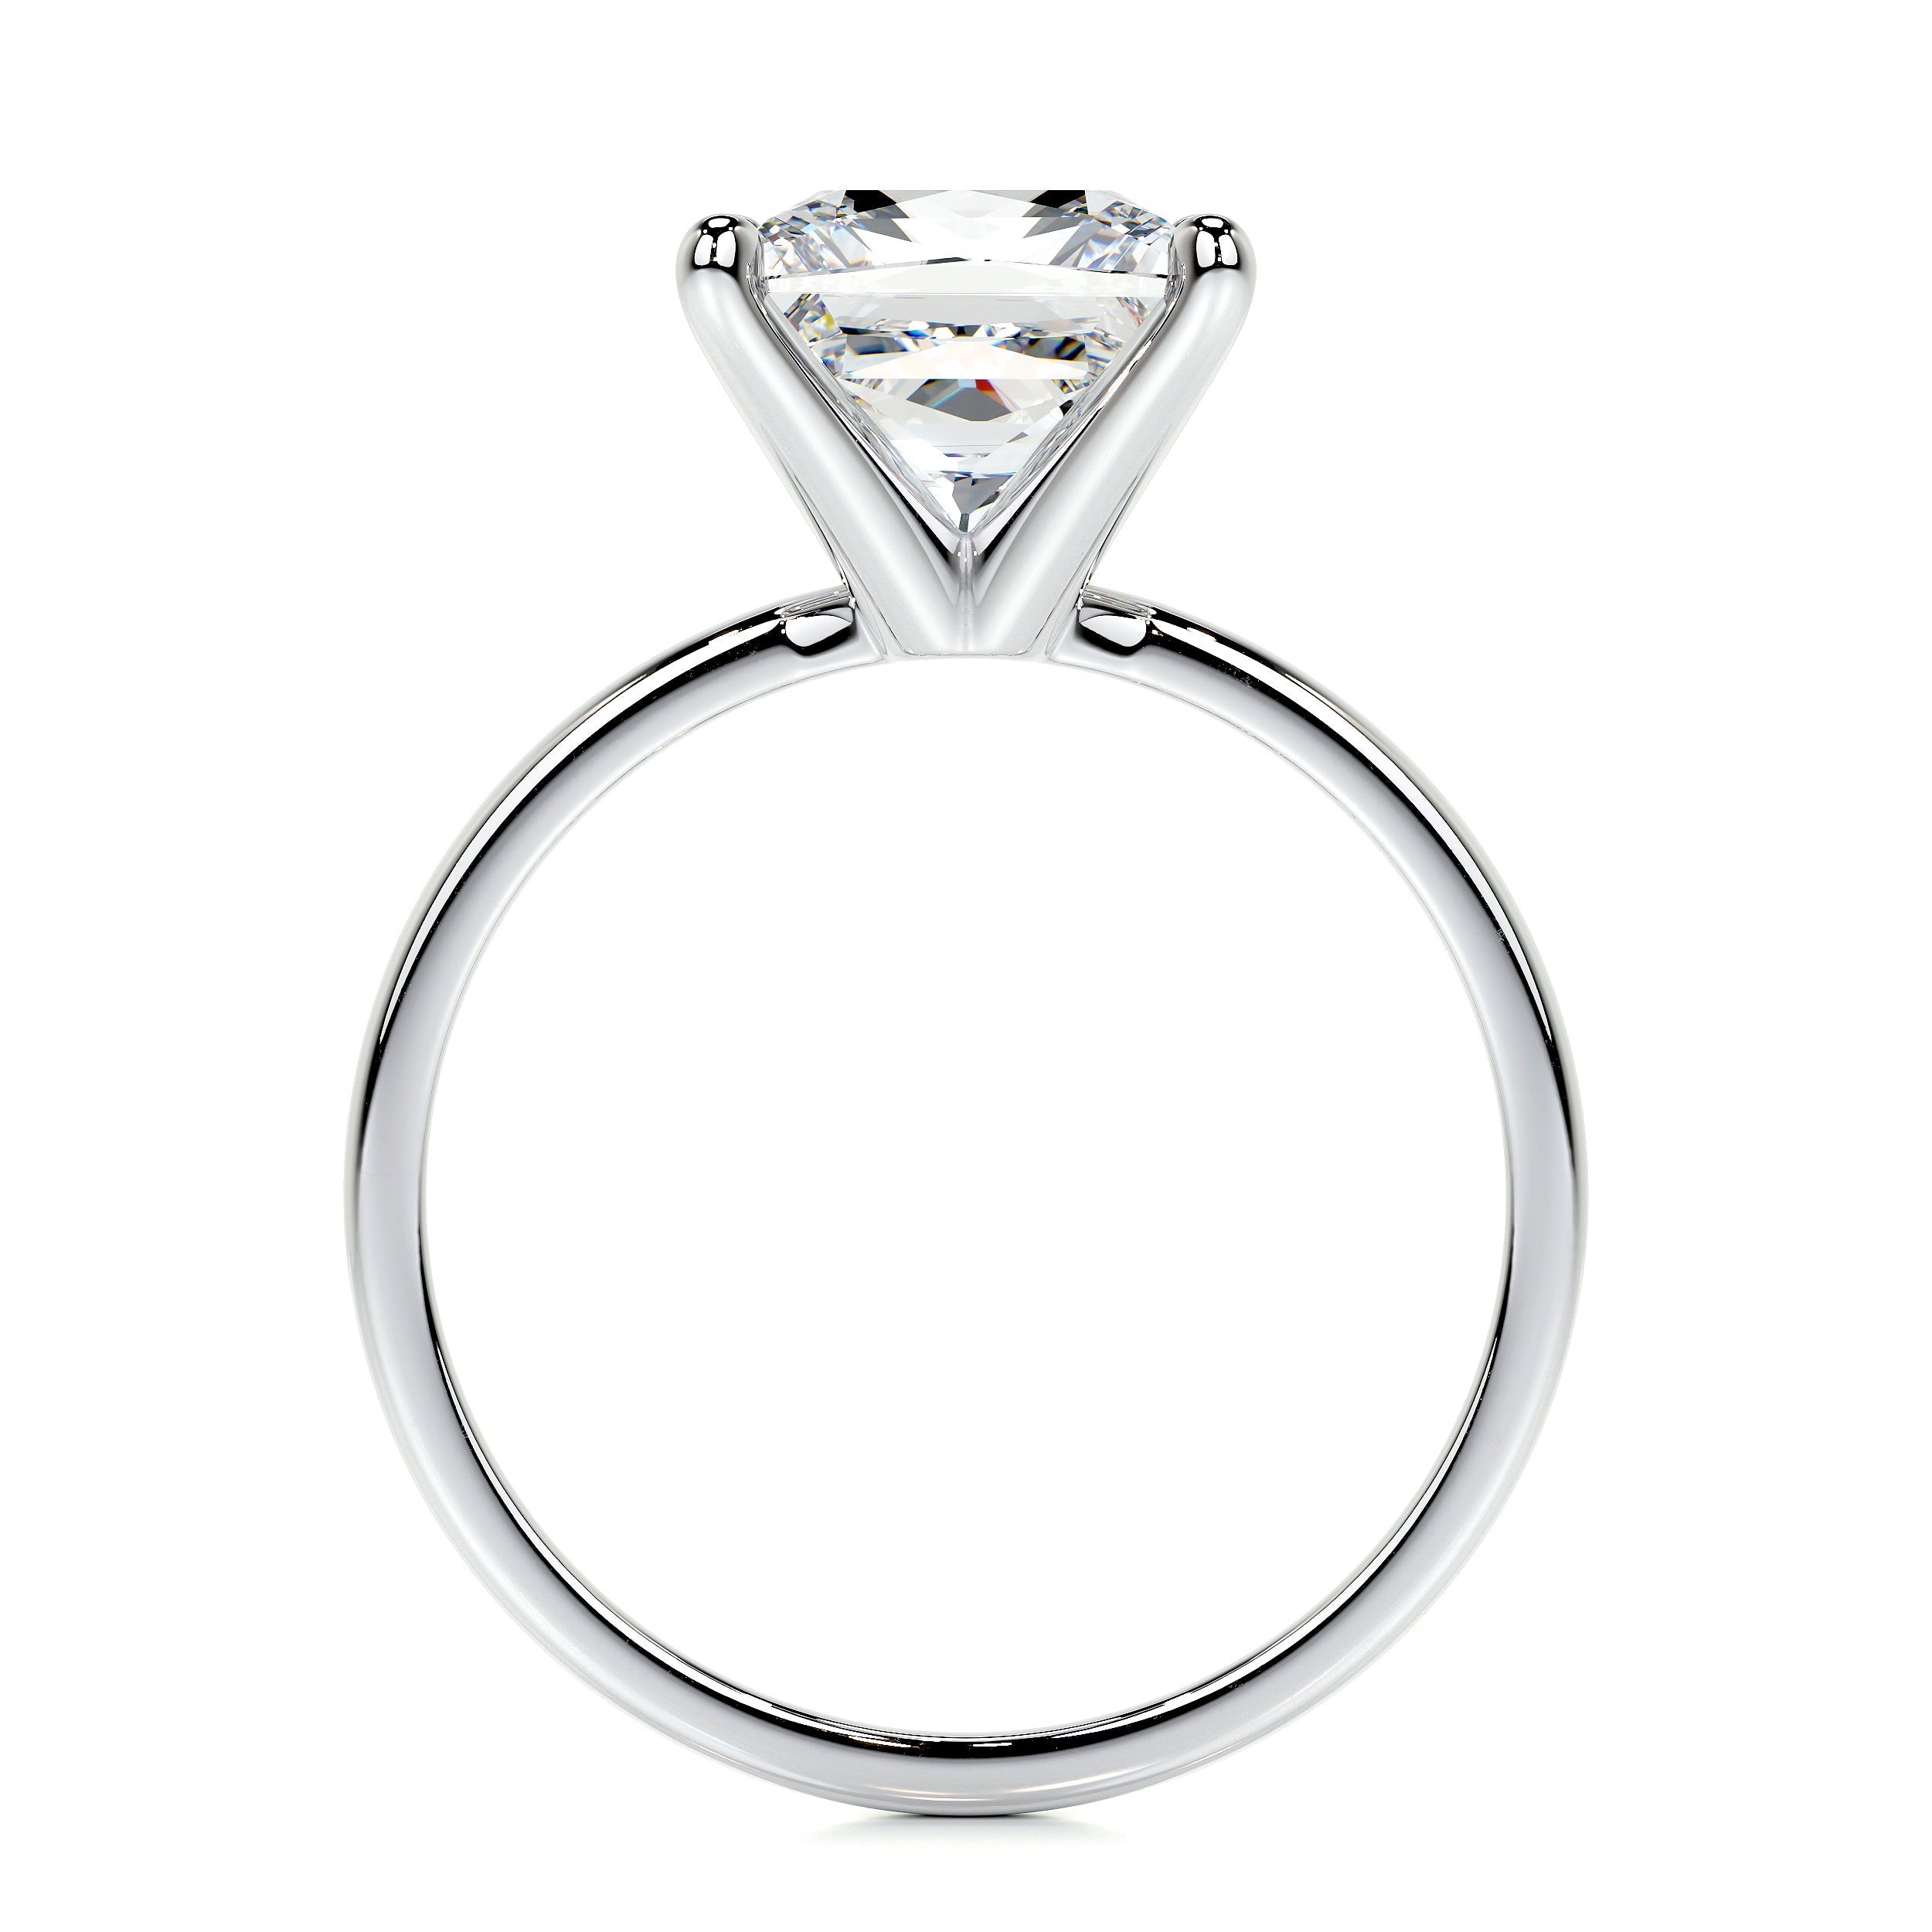 Jessica Lab Grown Diamond Ring   (3 Carat) -Platinum